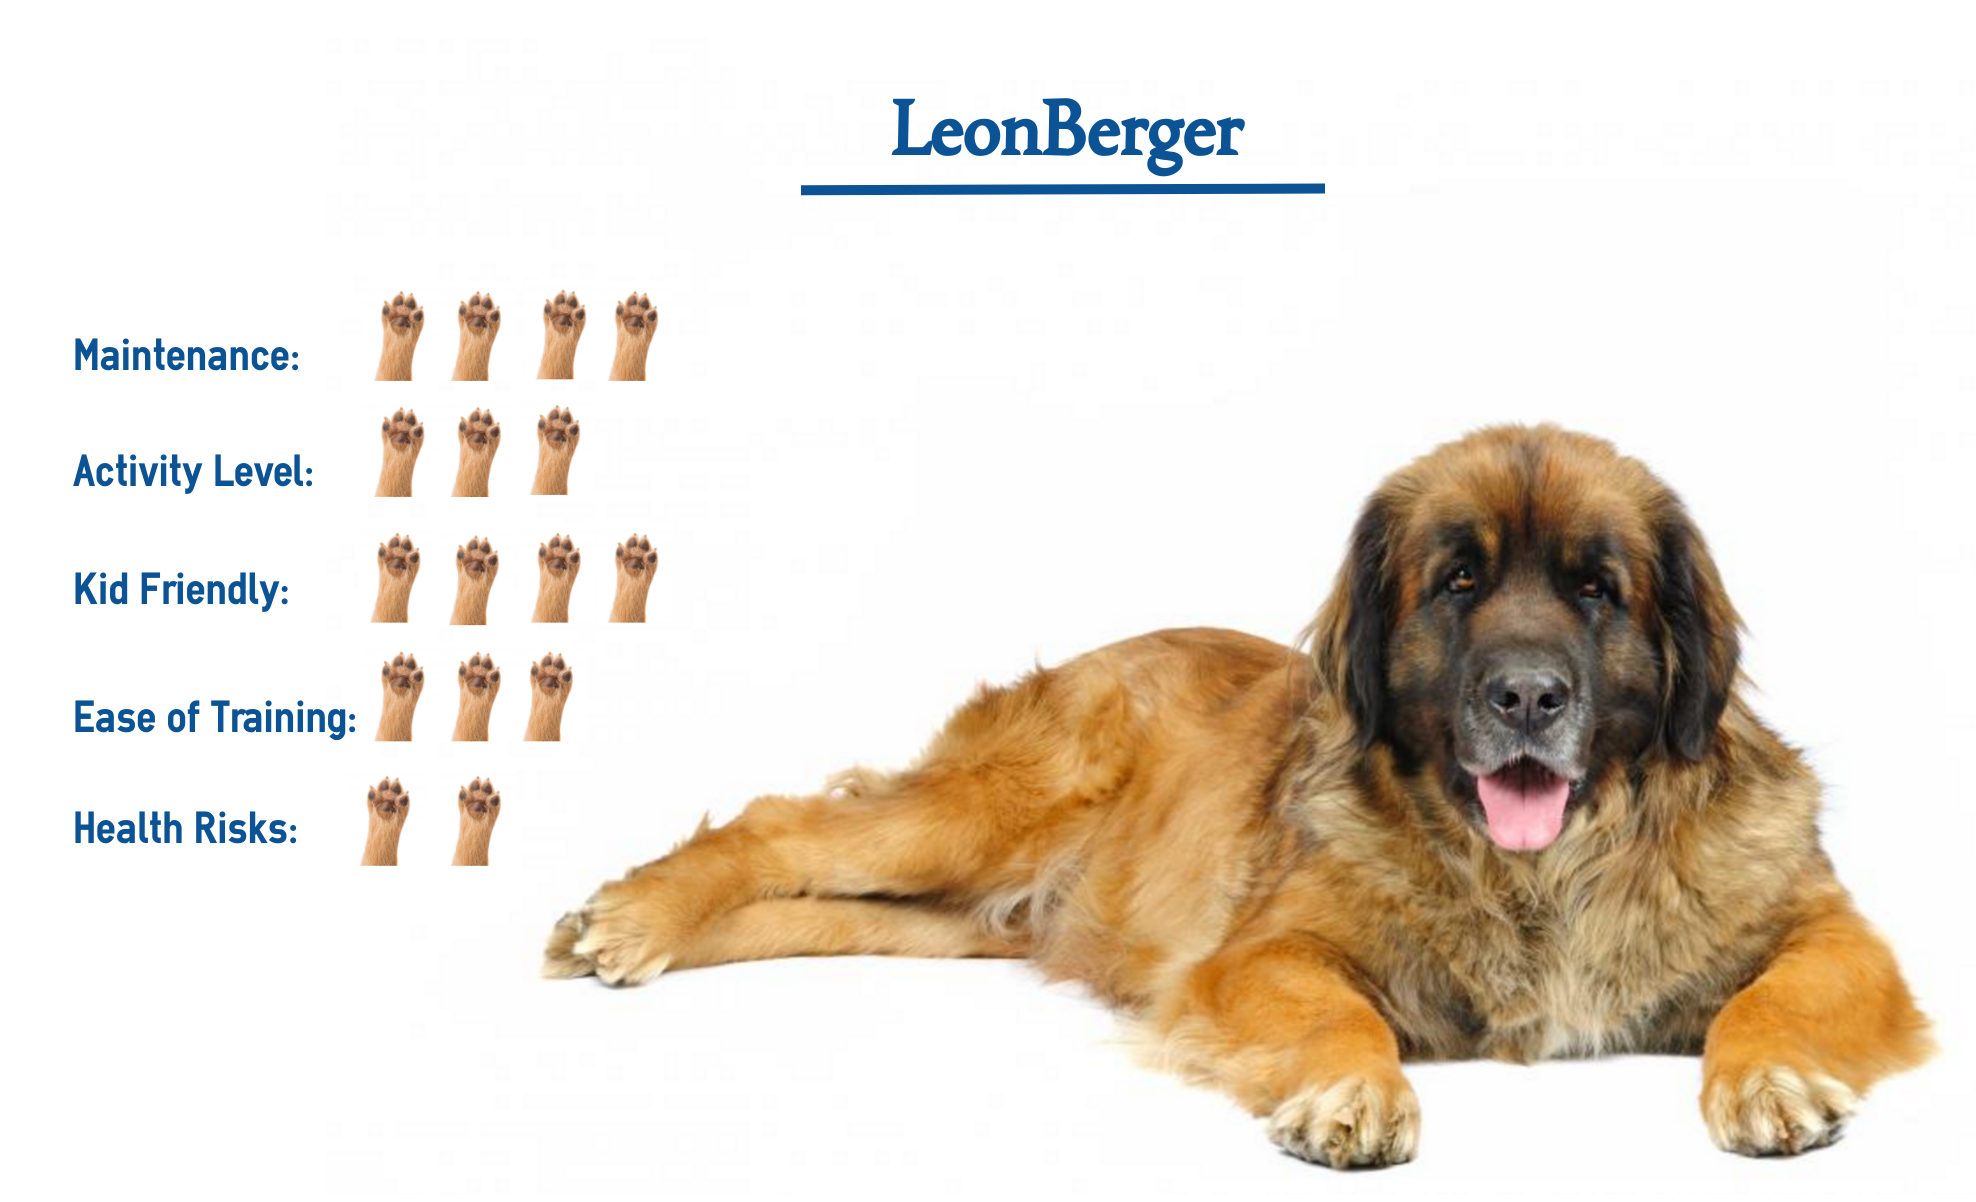 a leonberger dog